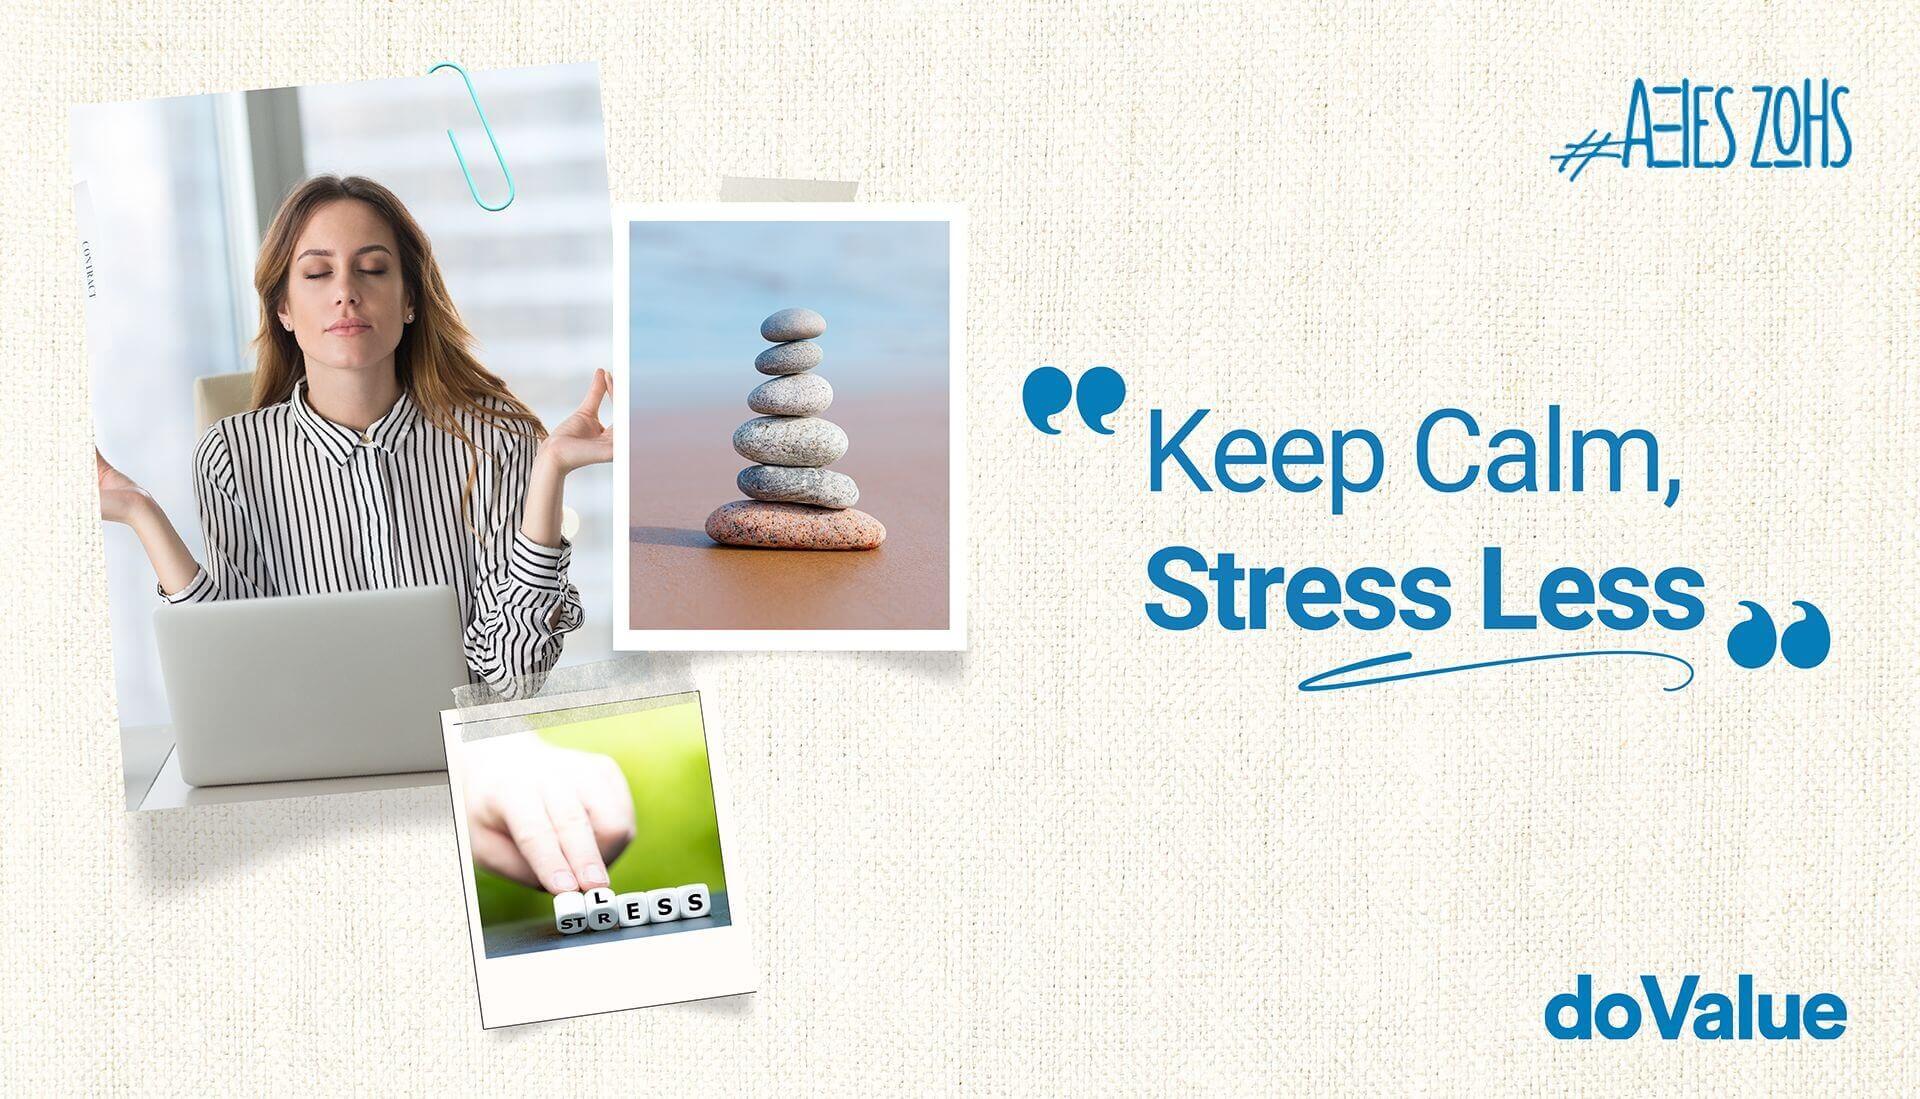 Keep Calm, Stress Less